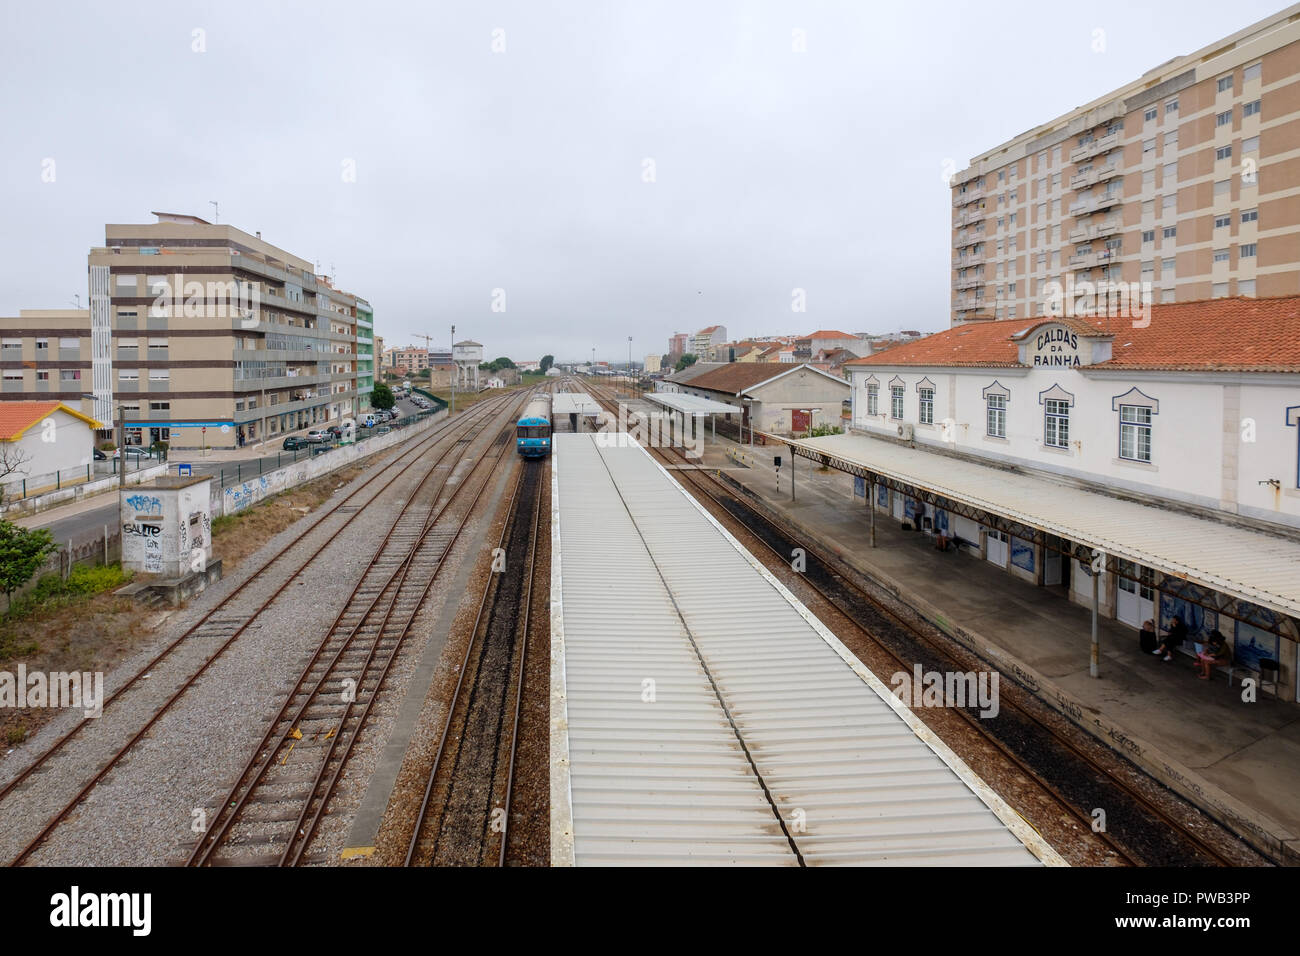 Aerial view of the train station in Caldas da Rainha, Portugal, Europe Stock Photo